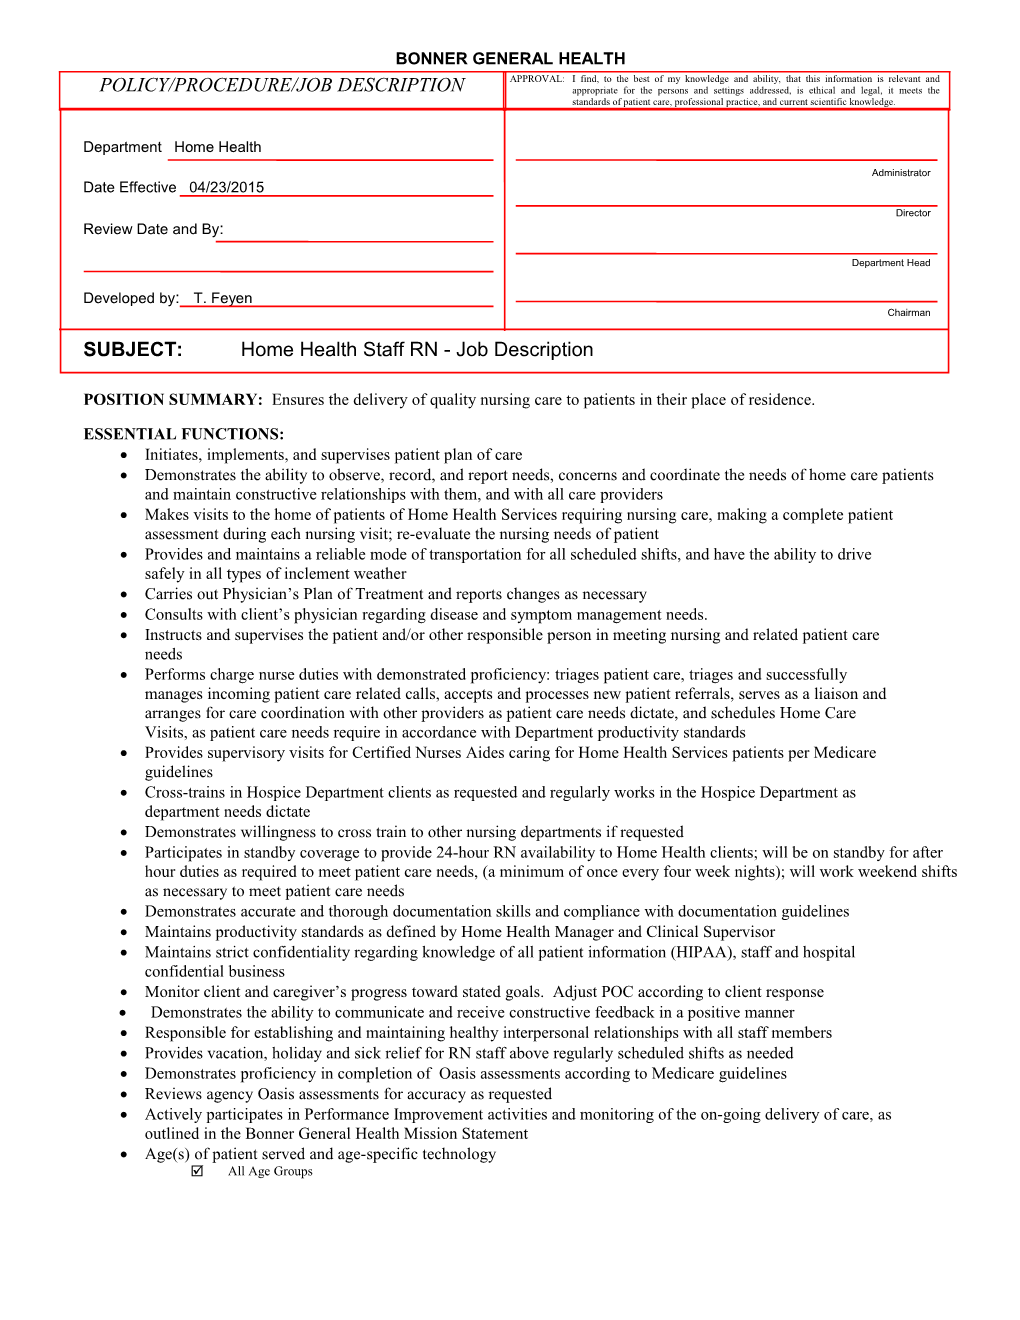 Subject:Home Health RN - Job Description